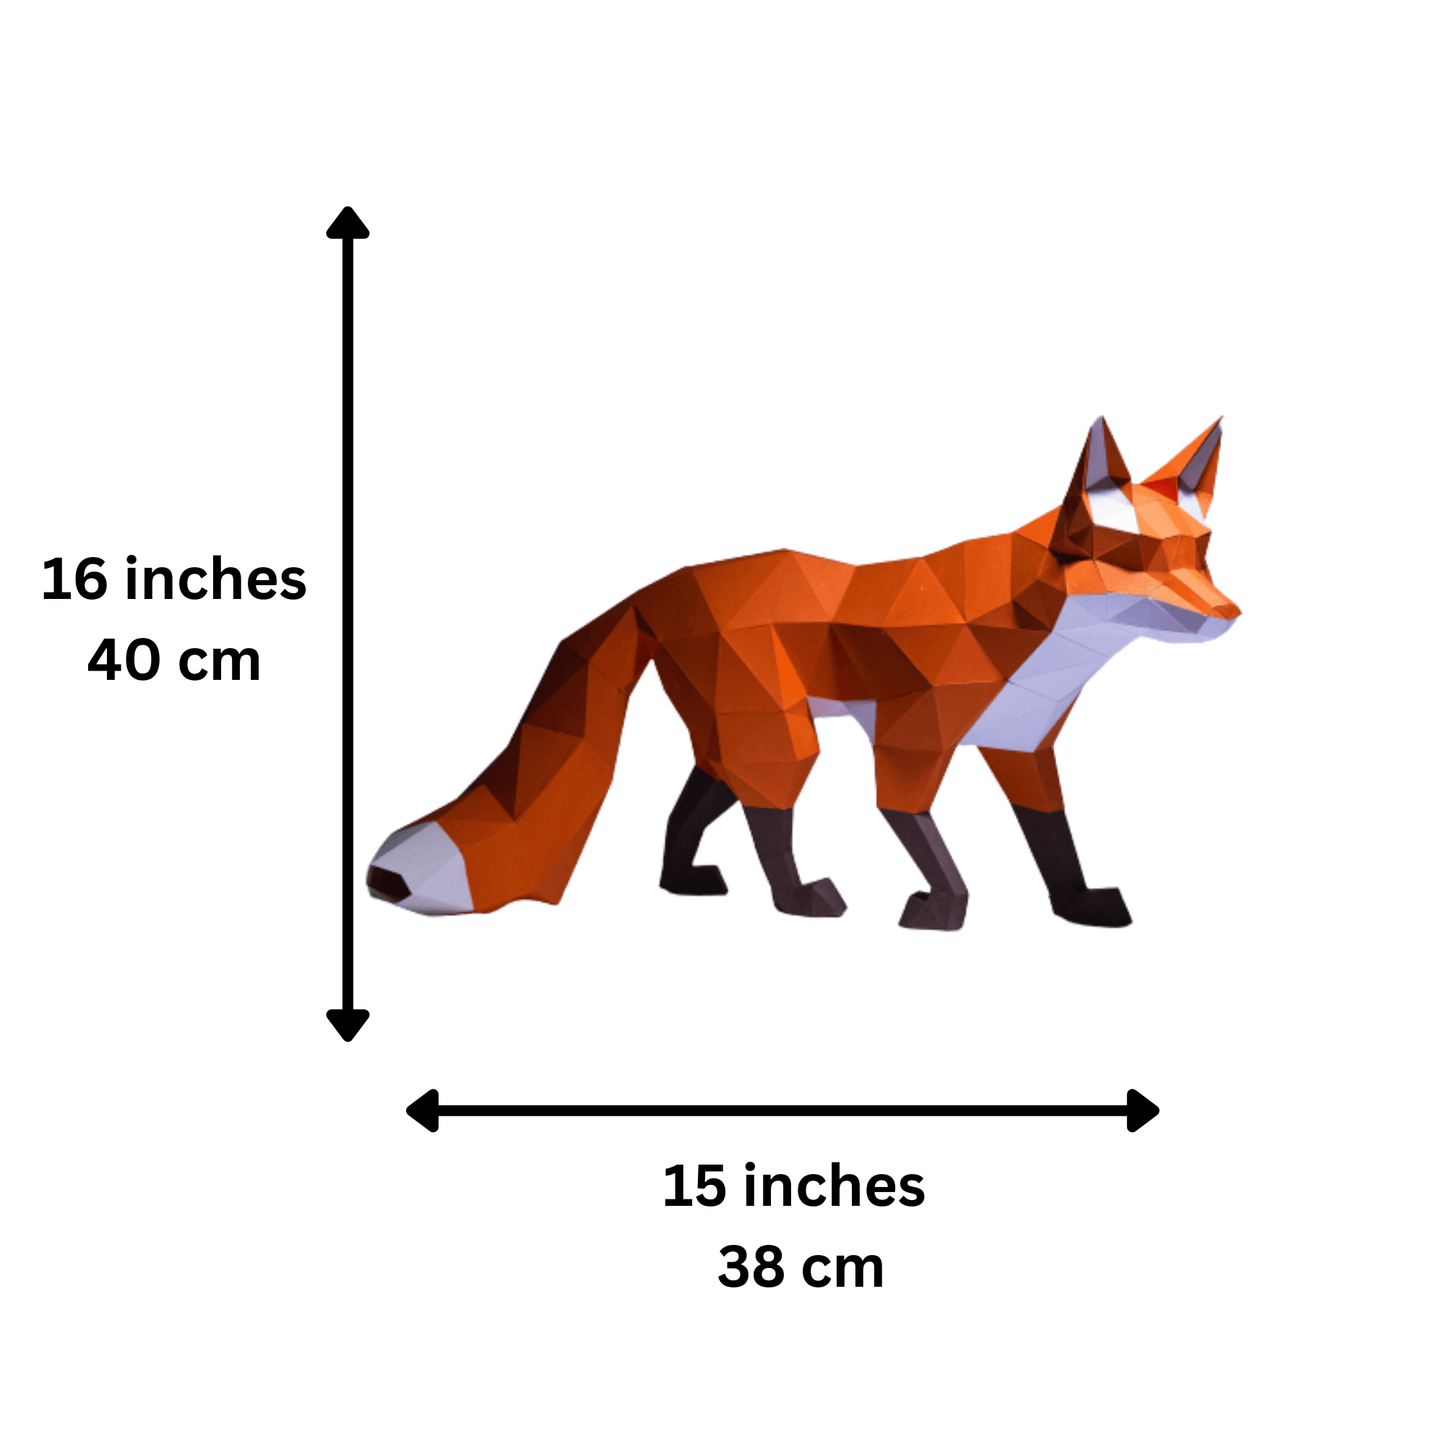 Origami Walking Fox